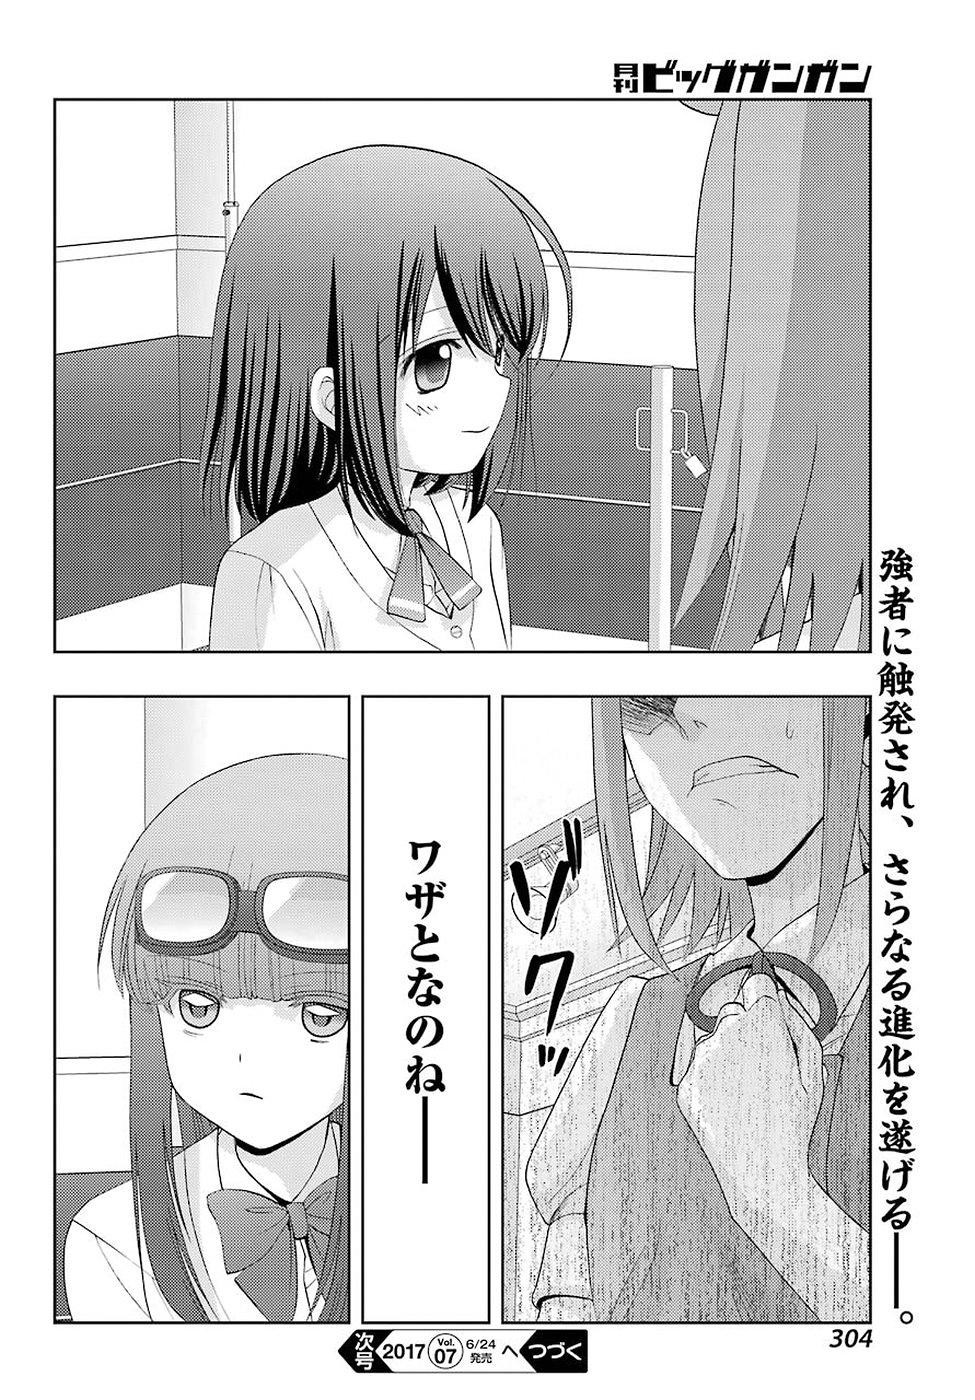 Shinohayu - The Dawn of Age Manga - Chapter 045 - Page 26